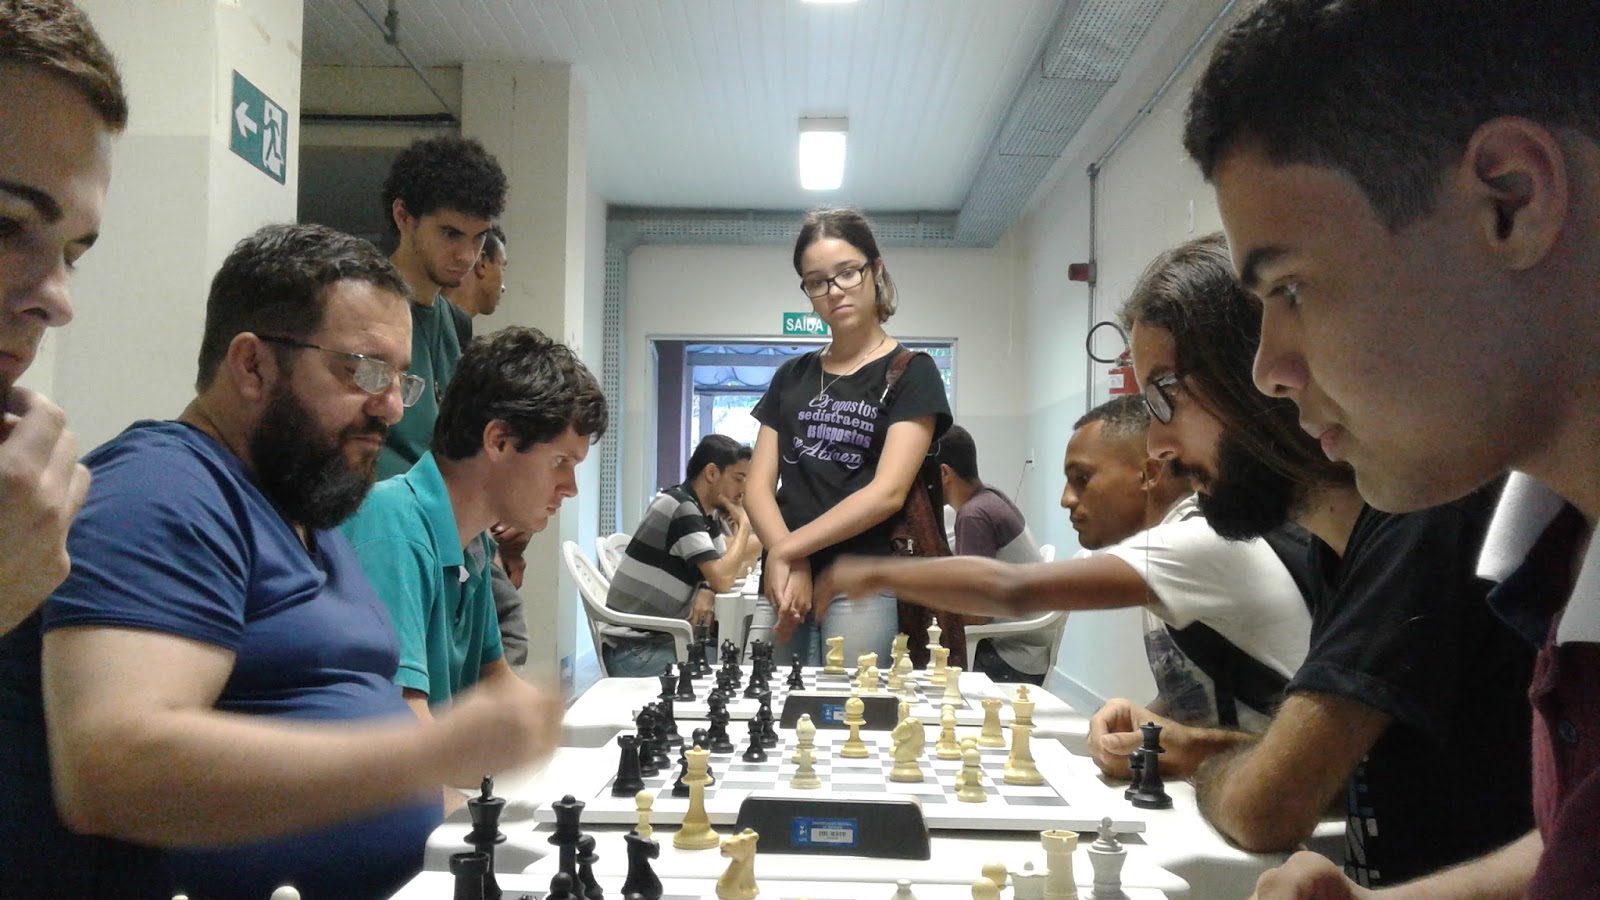 Clube de Xadrez Scacorum Ludus: O antigo ofício de arbitrar xadrez